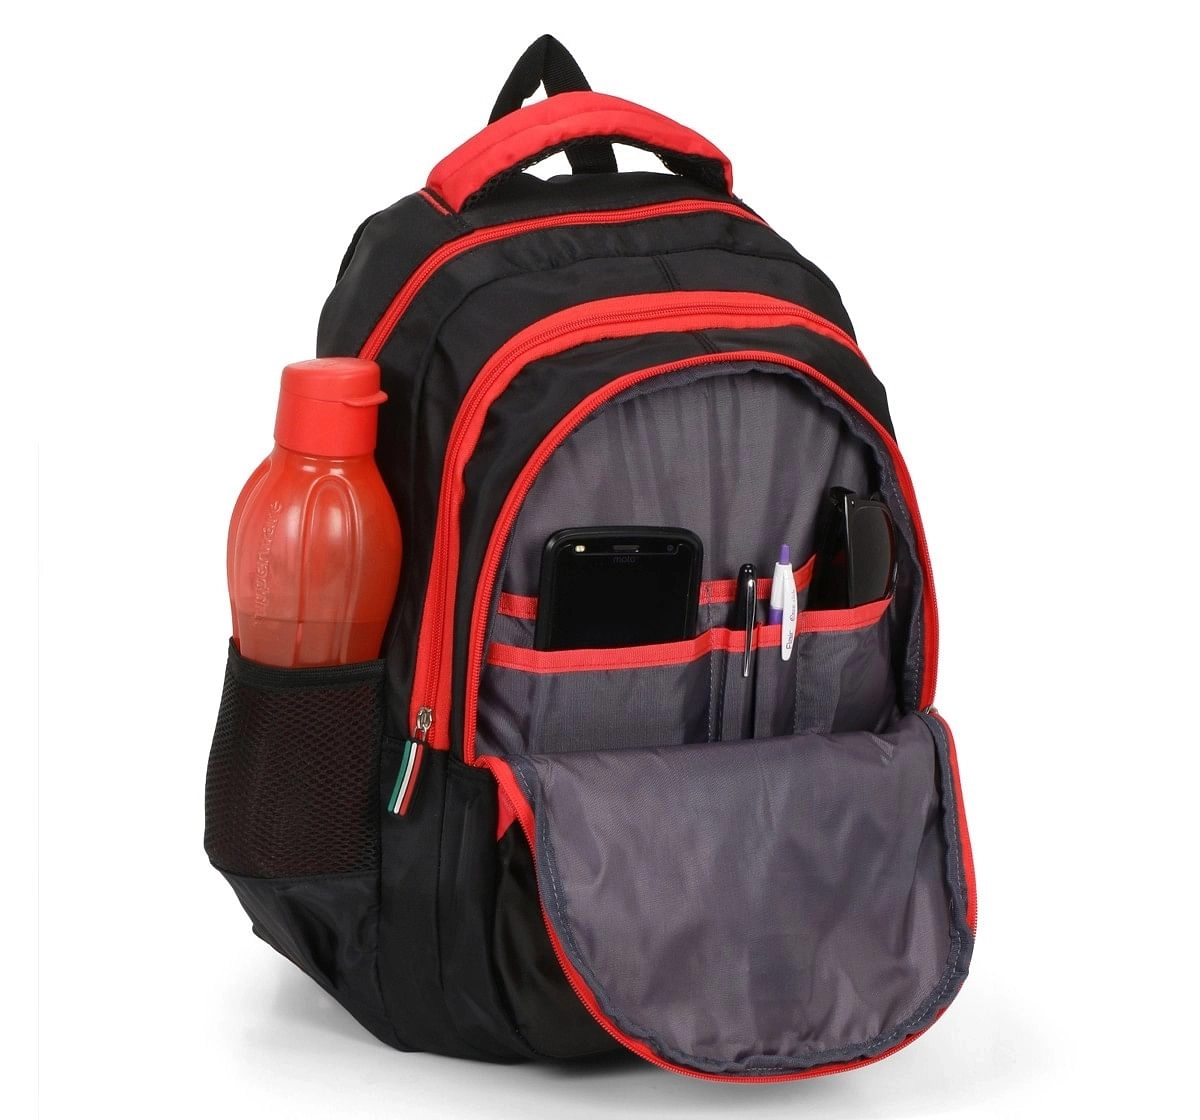 Ferrari Red Emotion 17 Backpack School bags for kids Multicolor 3Y+